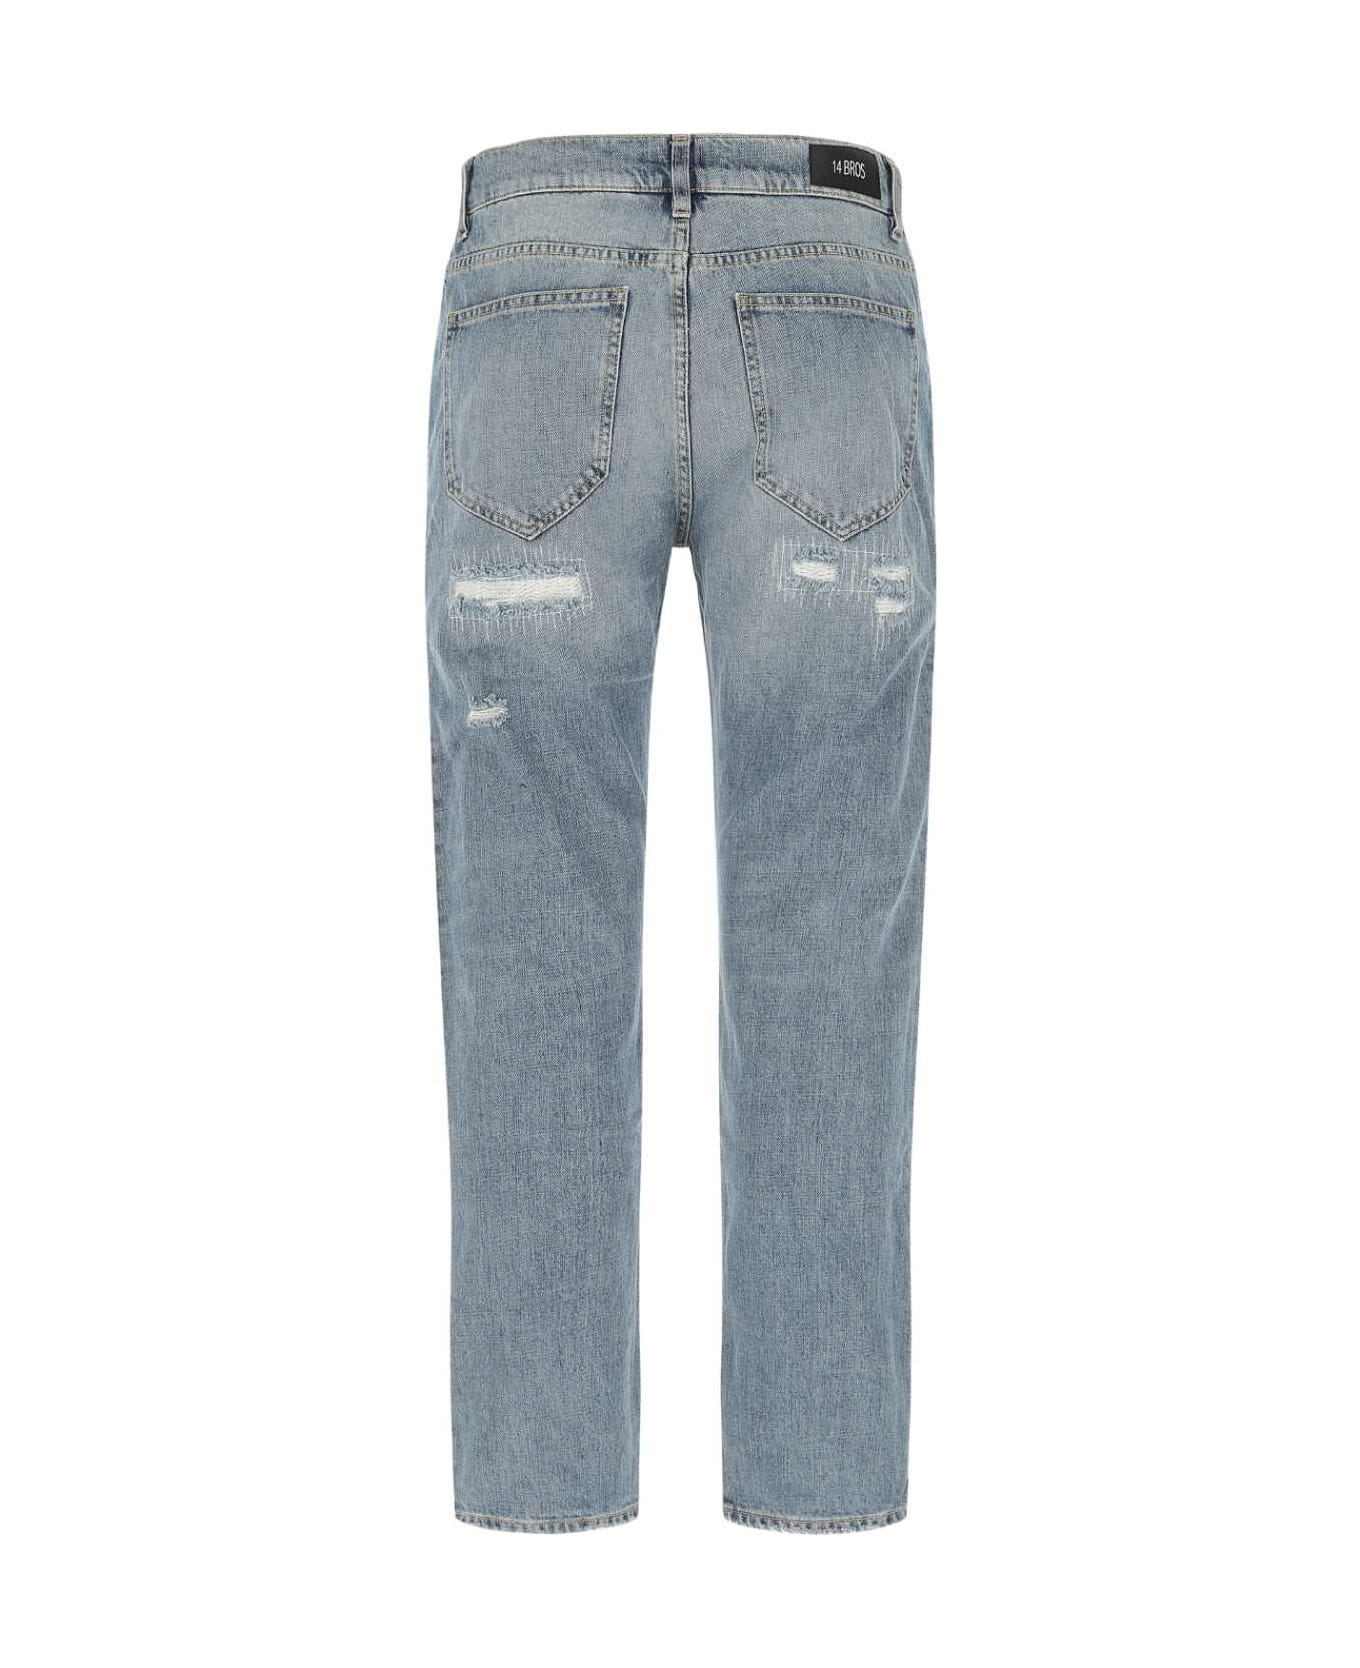 14 Bros Denim Cheswick Jeans - 9079